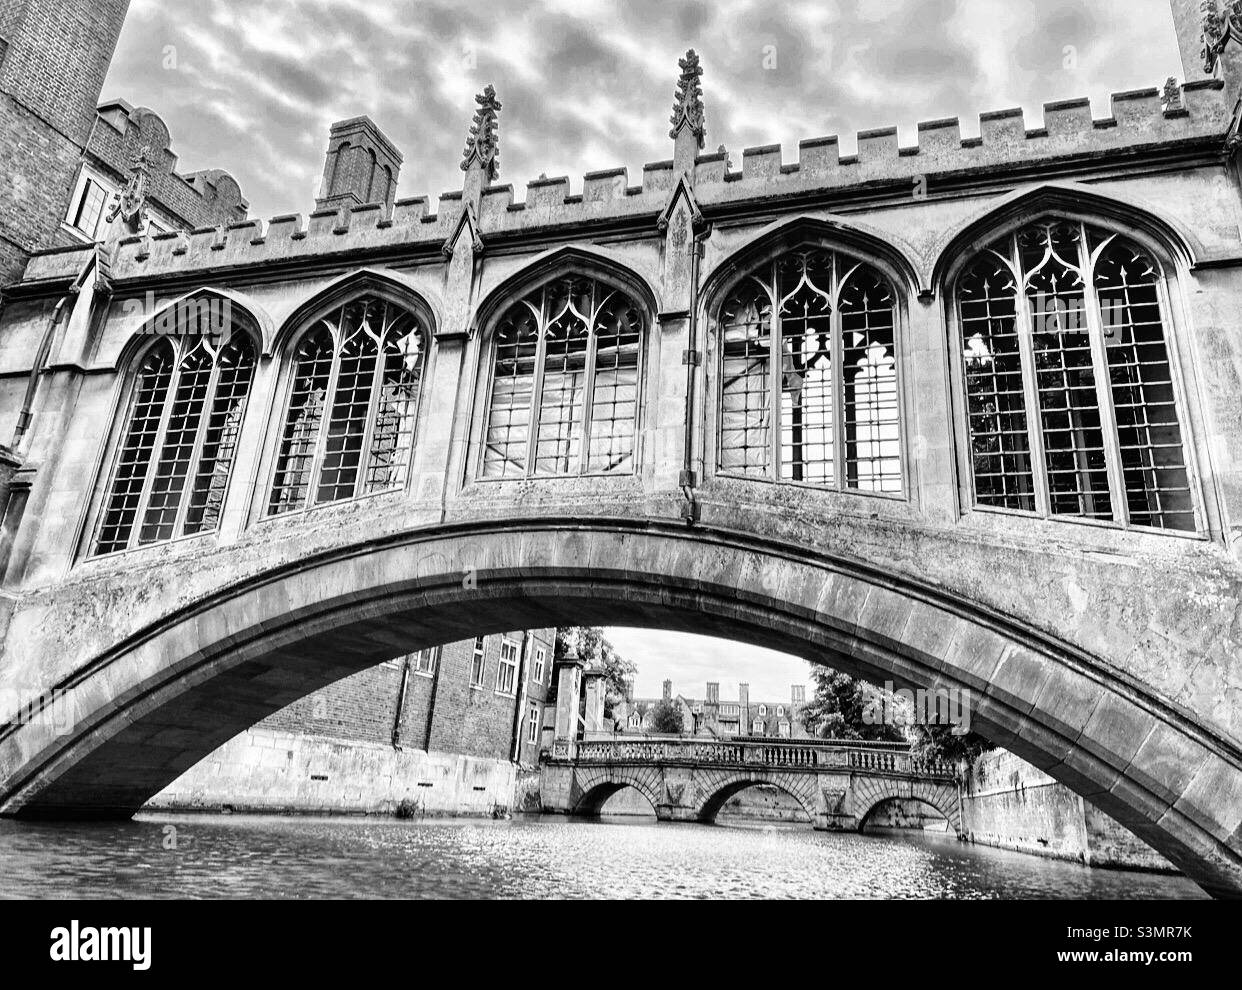 The Bridge of Sighs, St John’s College, Cambridge University, UK - black and white image Stock Photo